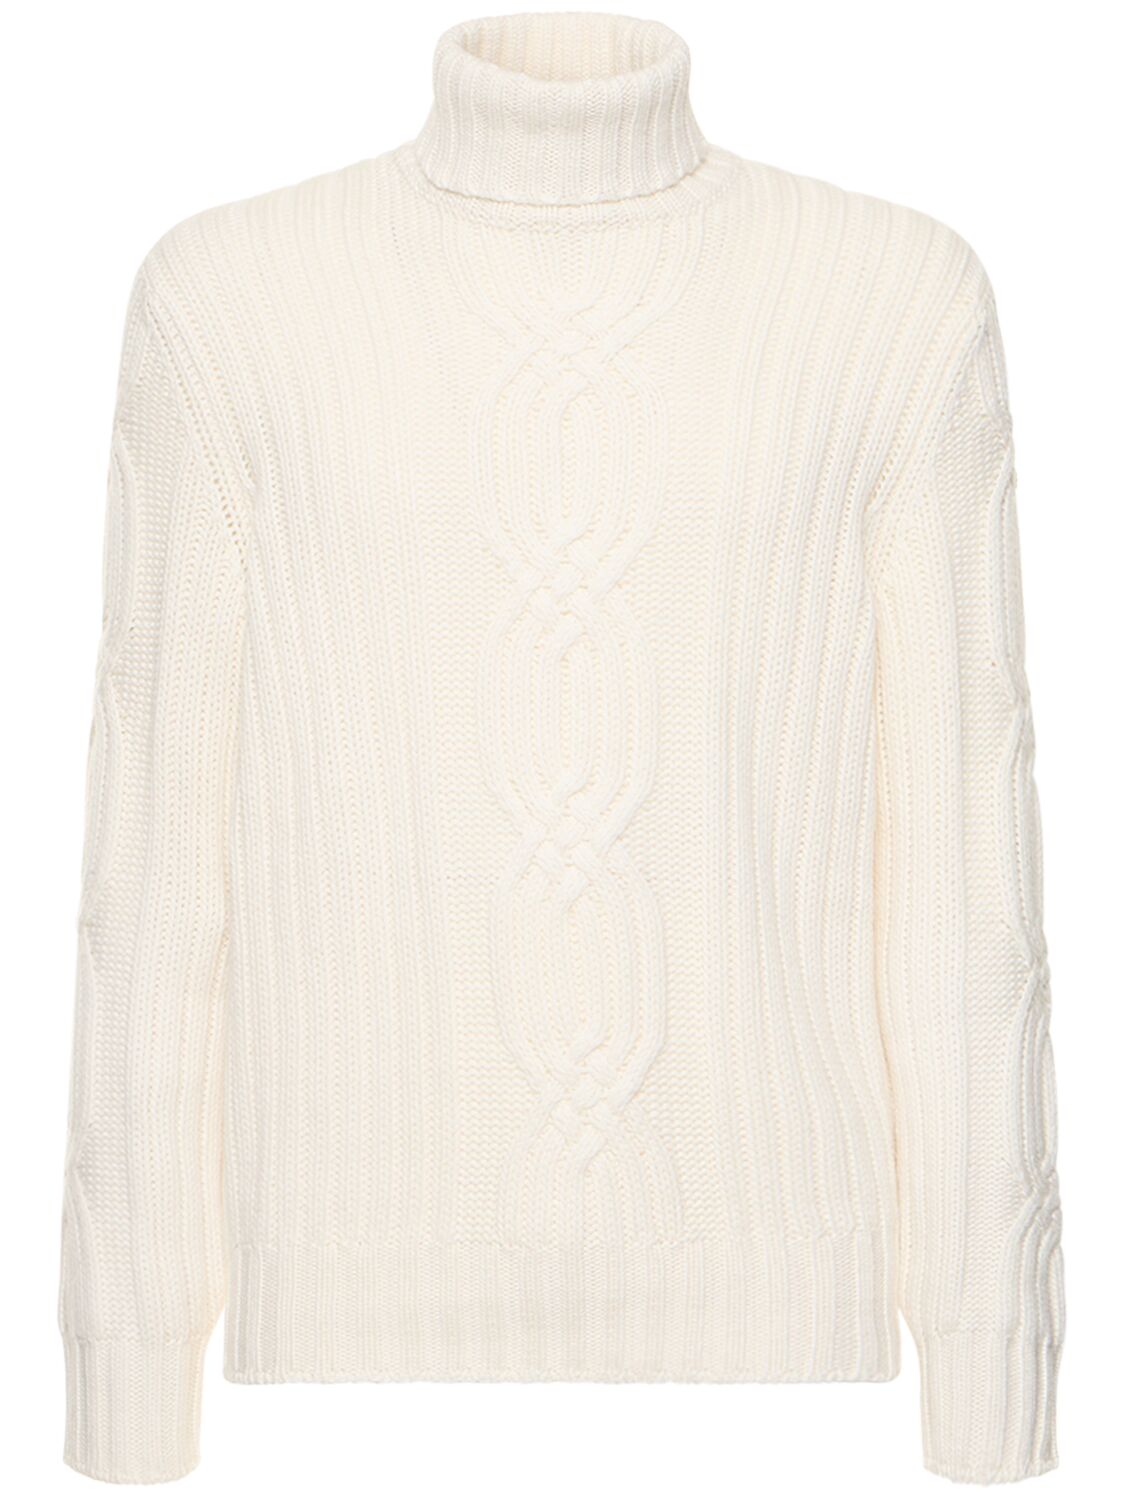 Image of Cashmere Knit Turtleneck Sweater